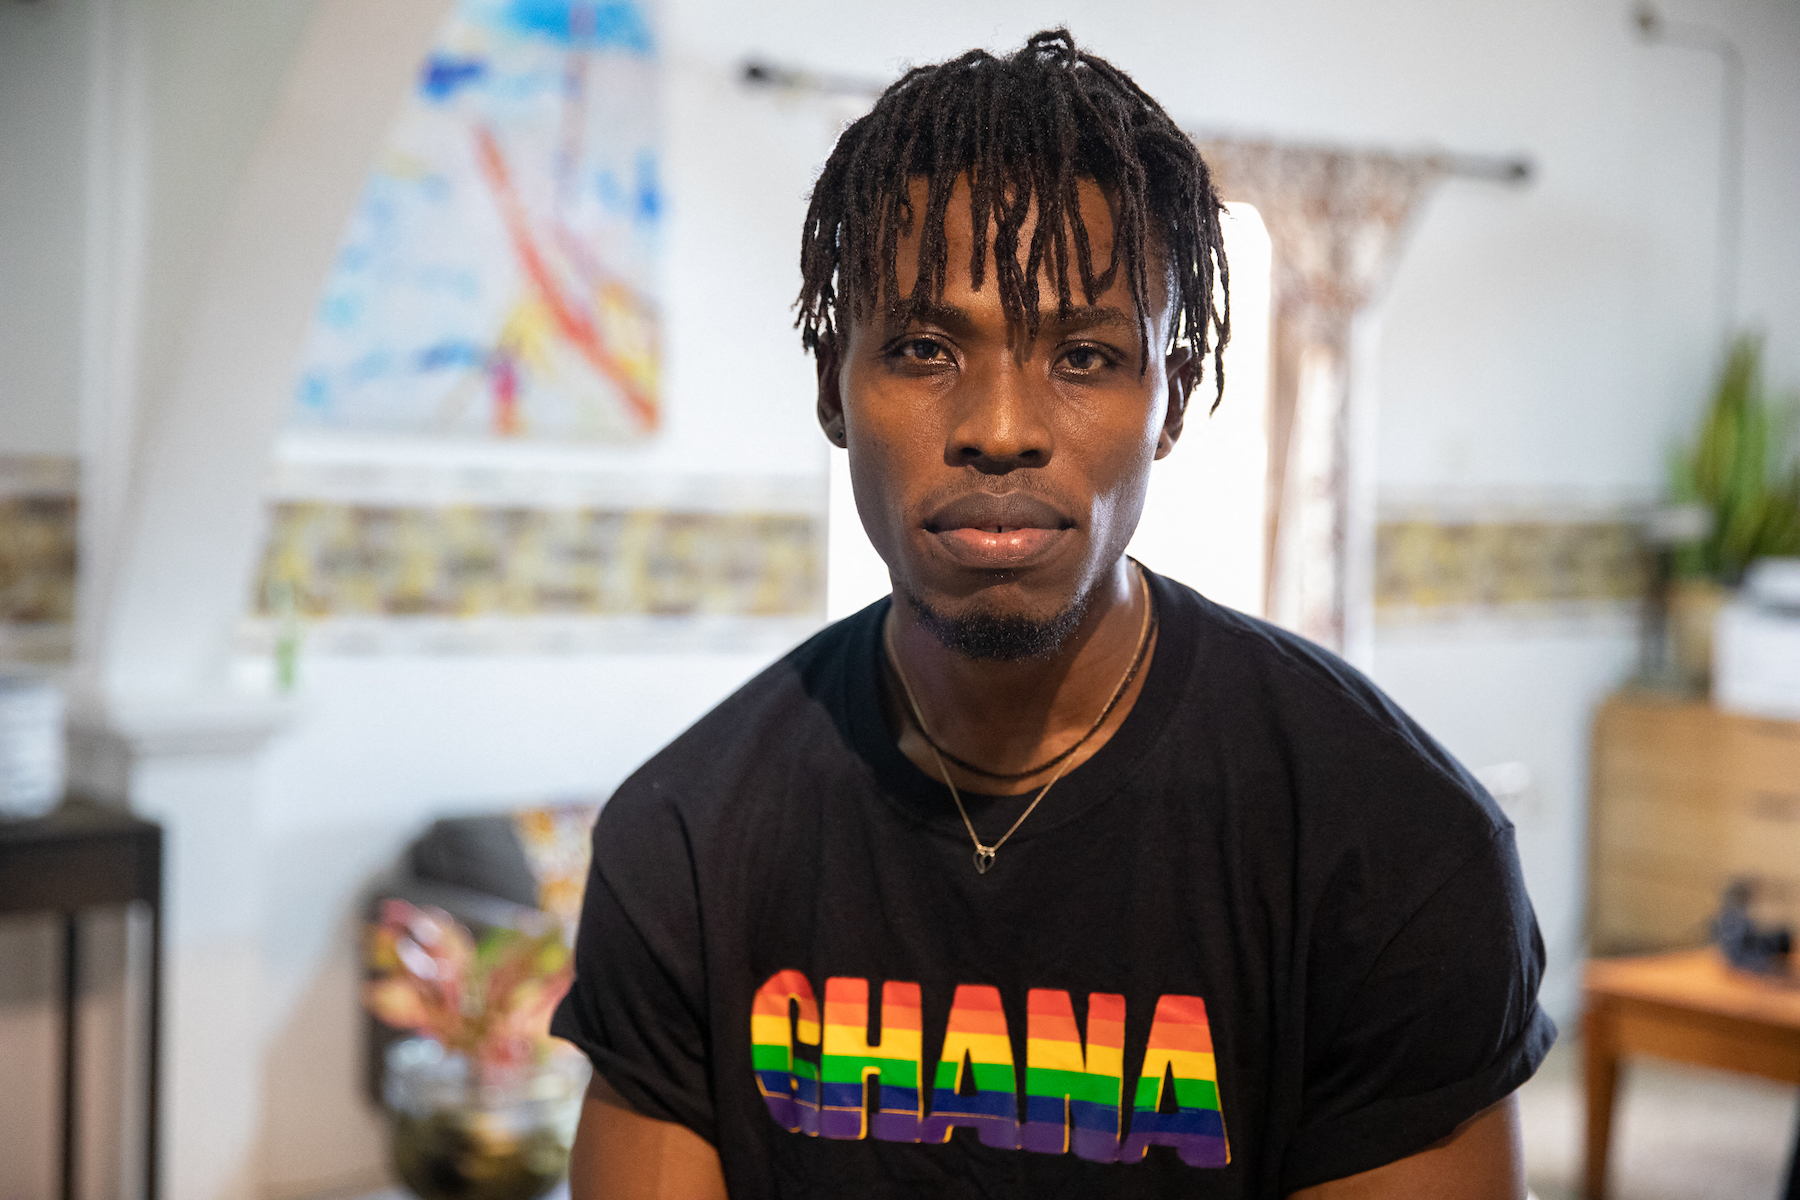 Ghana illegal lgbtq identity prison 3 years